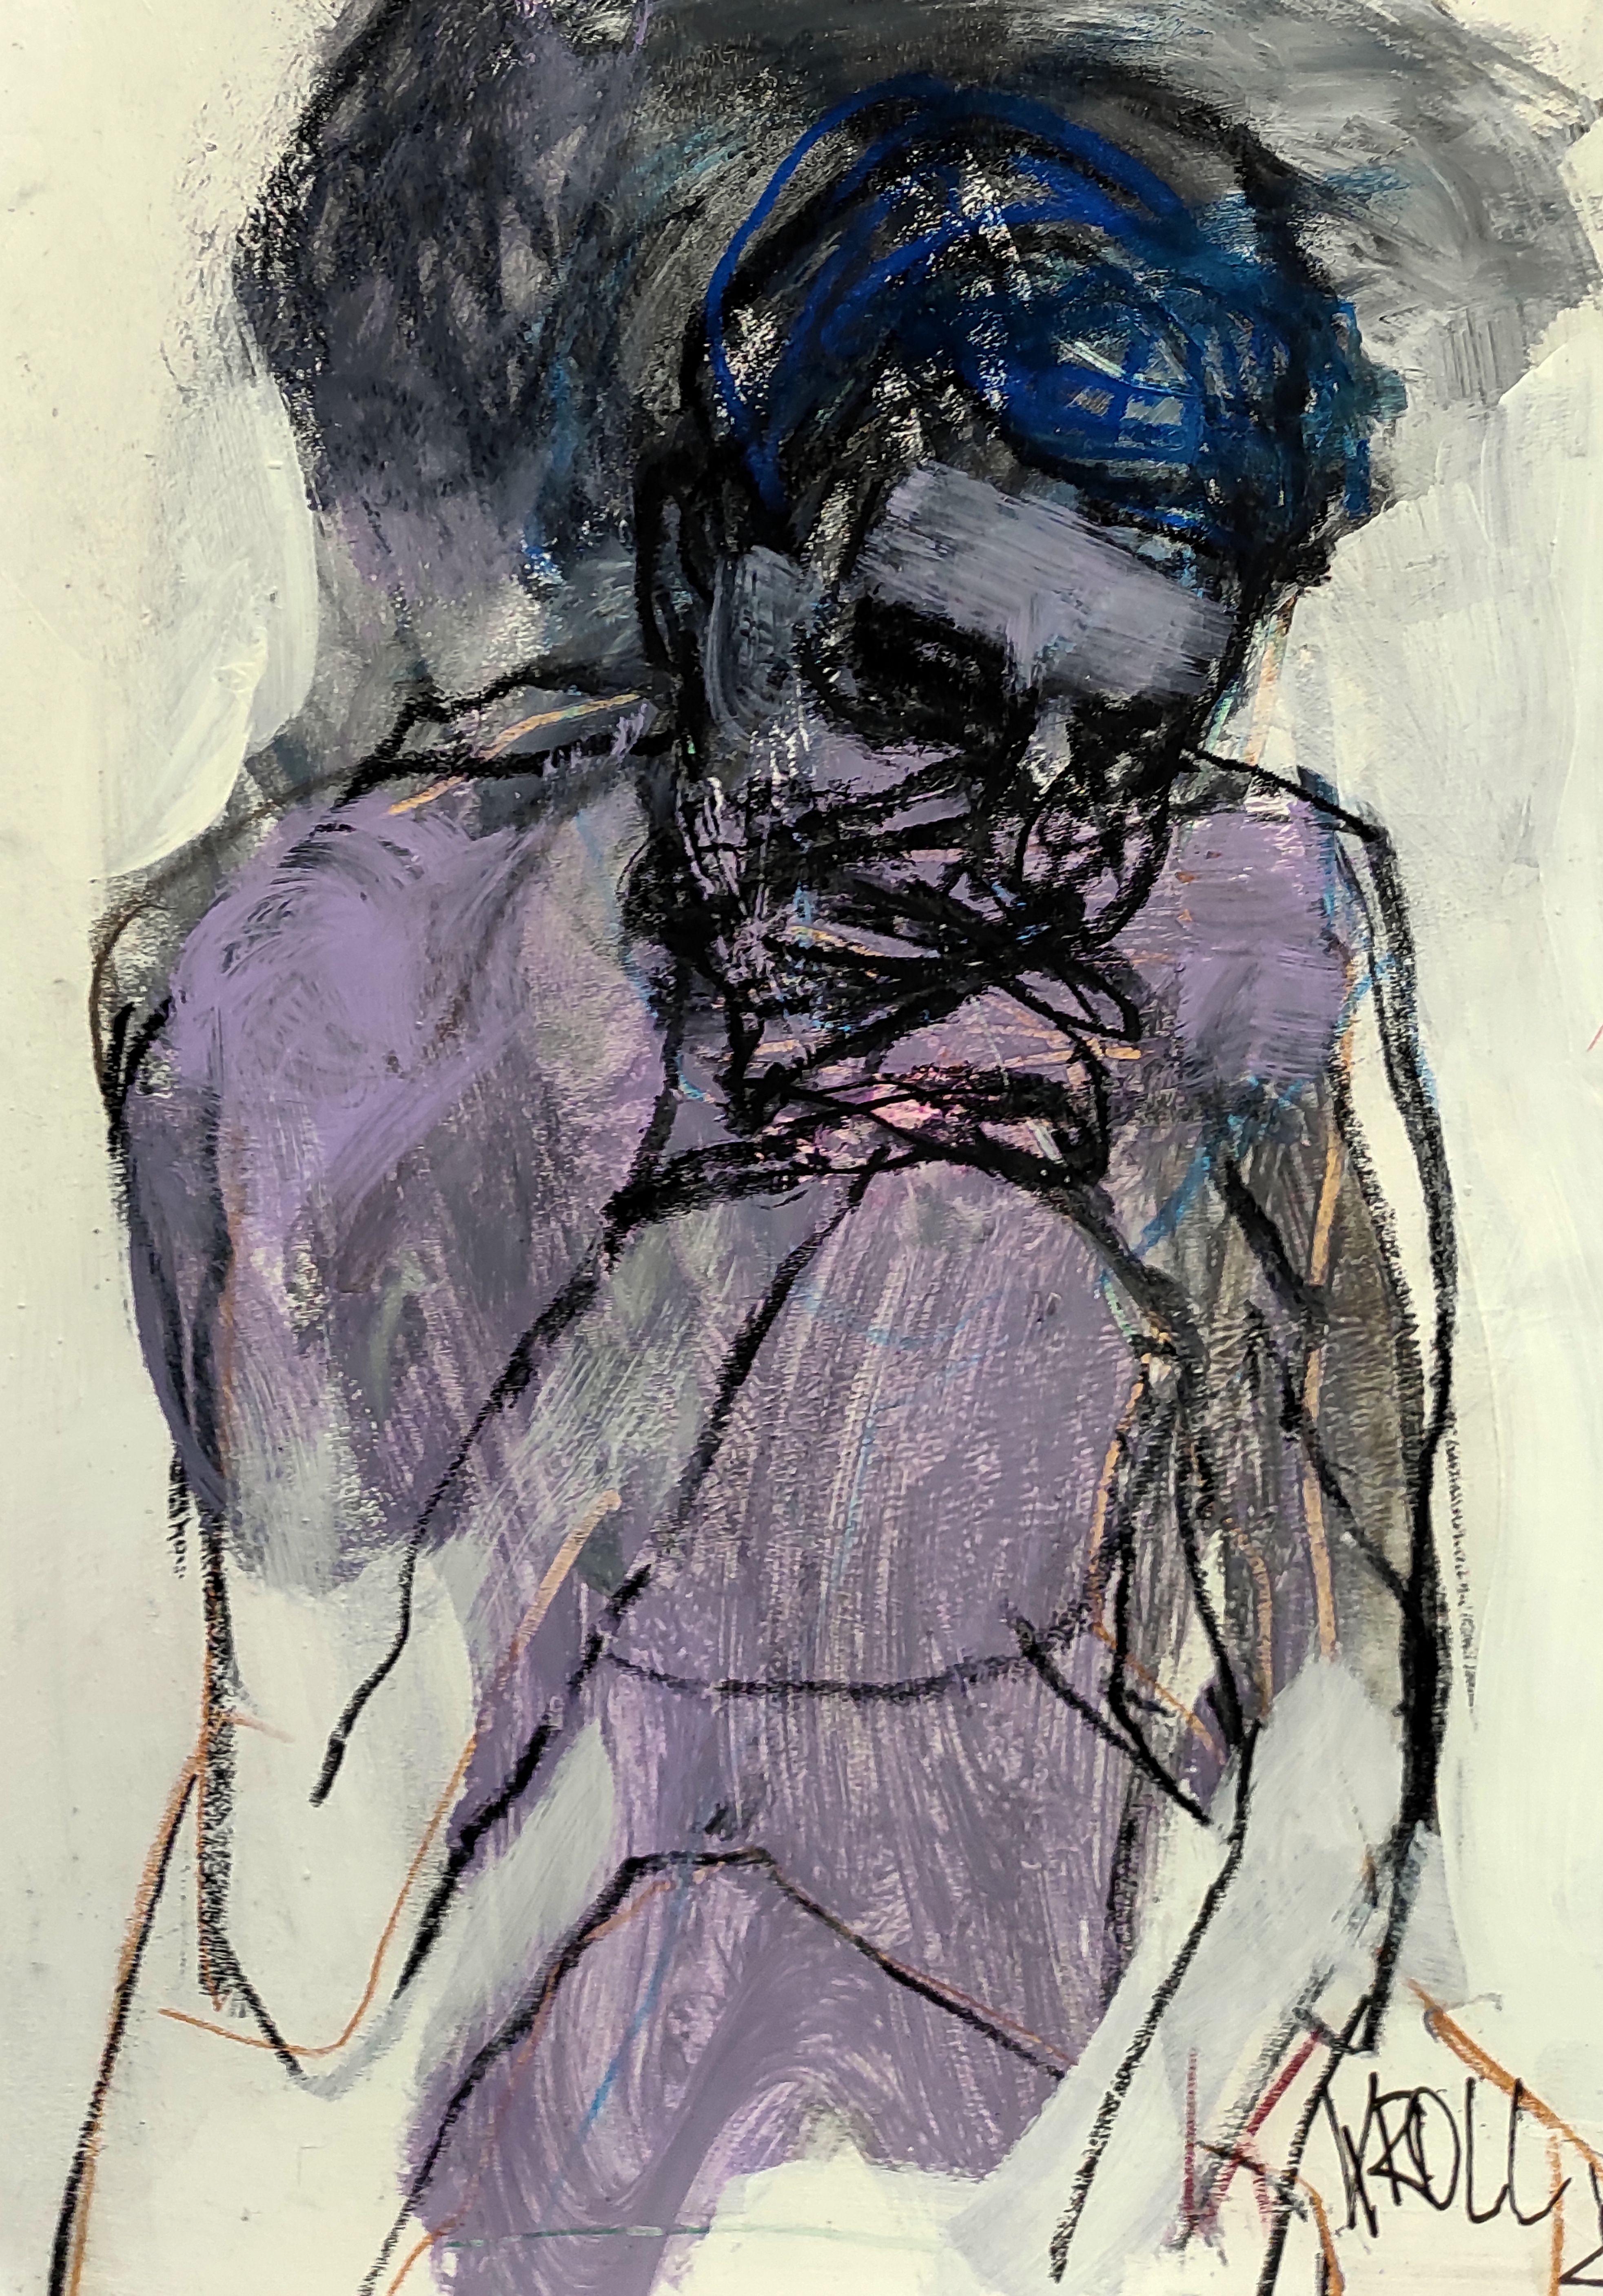 Squisse de femme II, dessin, crayon/crayon coloré sur papier - Art de Barbara Kroll